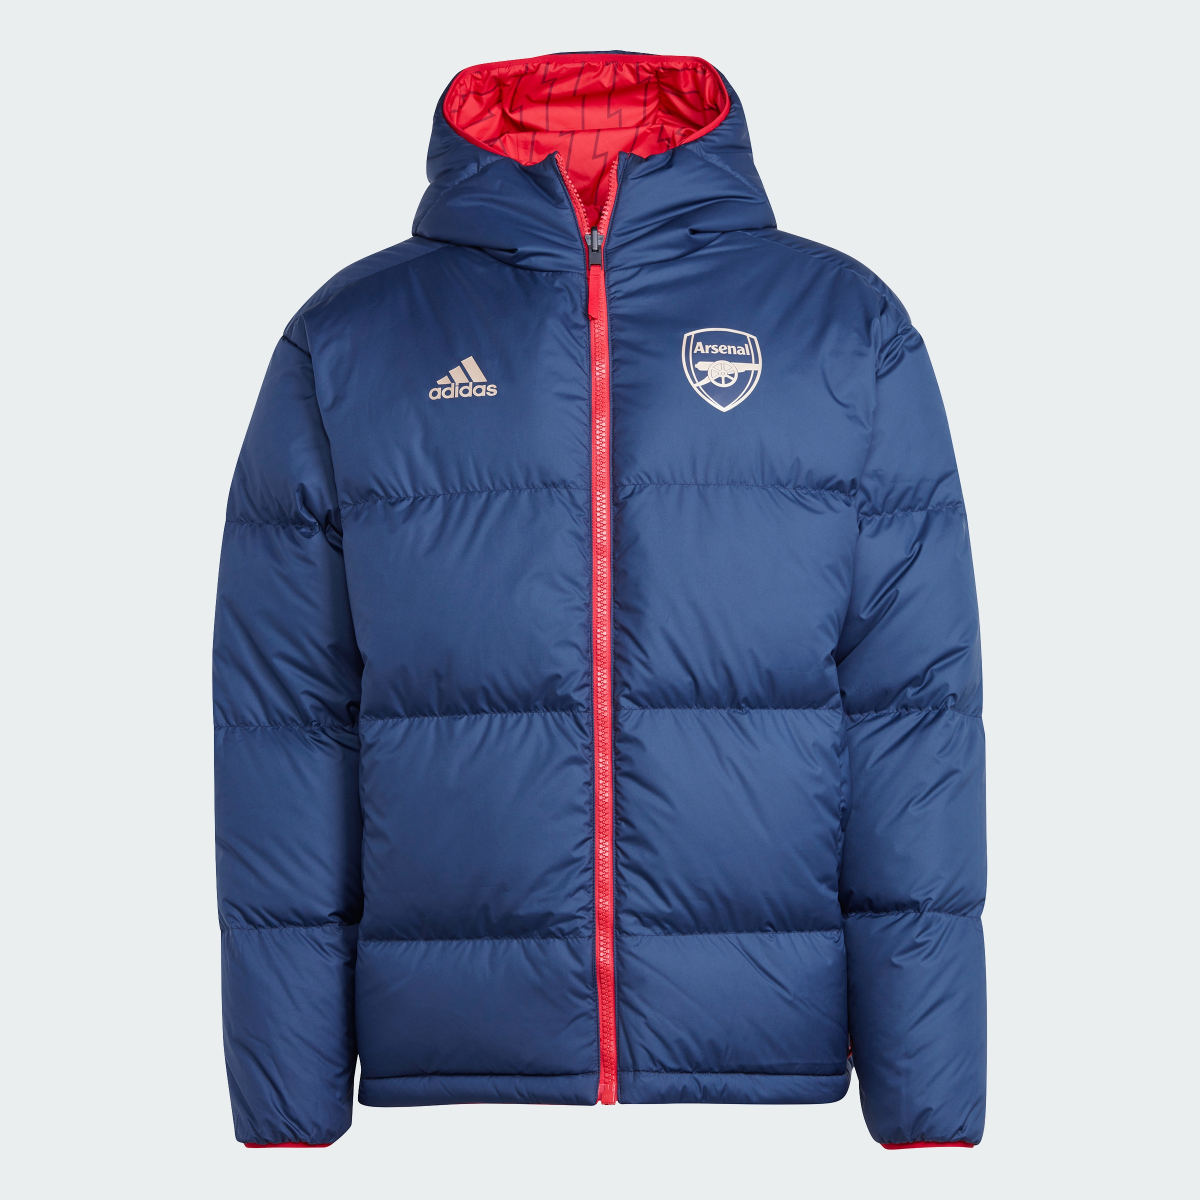 Adidas Arsenal DNA Down Jacket. 6